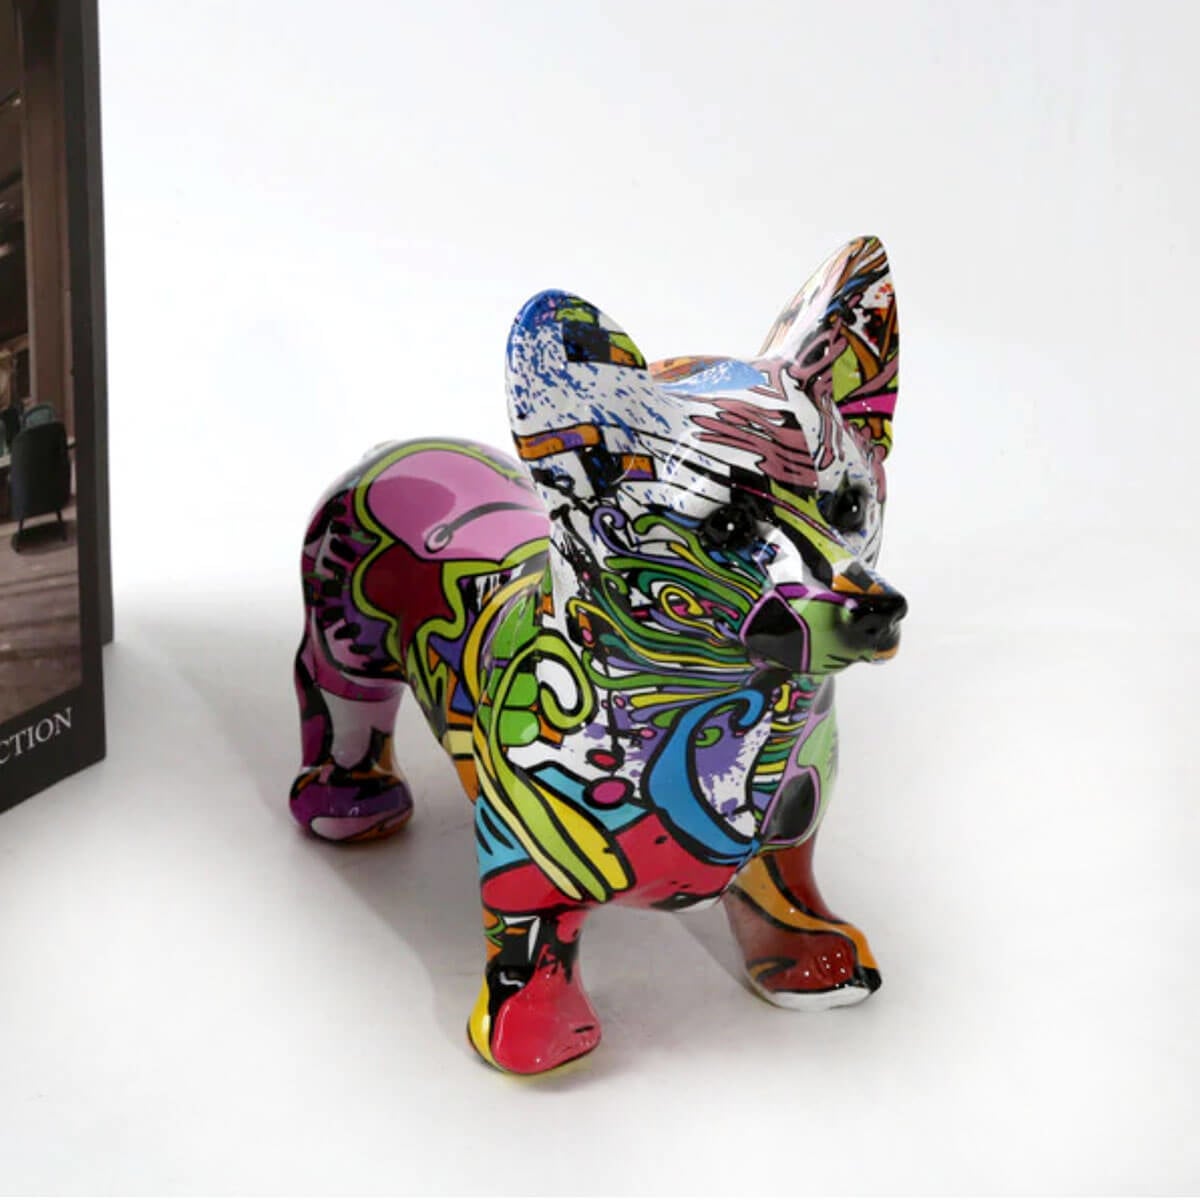 Corgi Dog Statue Colorful Graffiti Art Sculpture